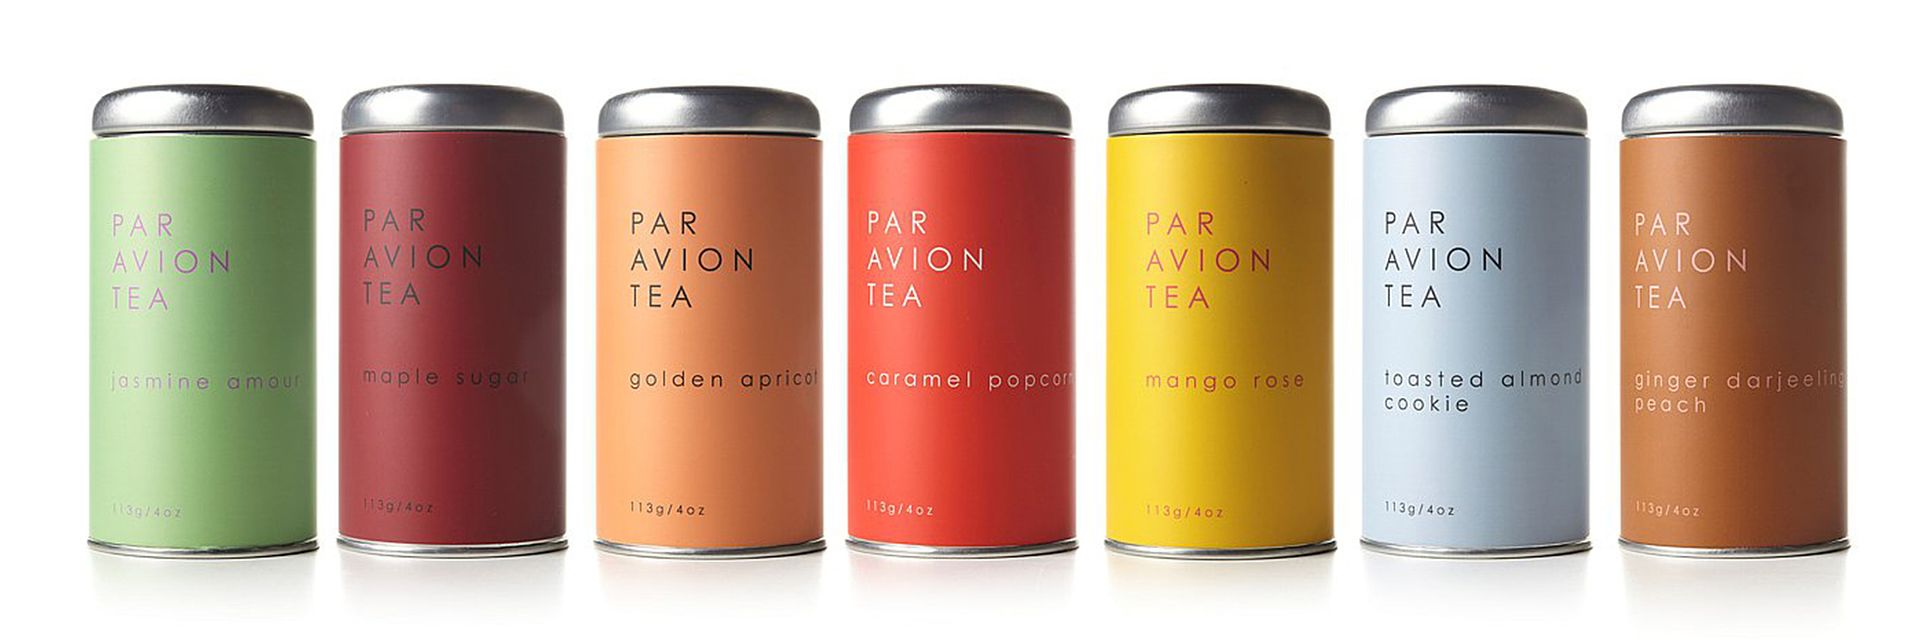 Par Avion tea: Fantastic, imaginative blends that also give back to girls in need